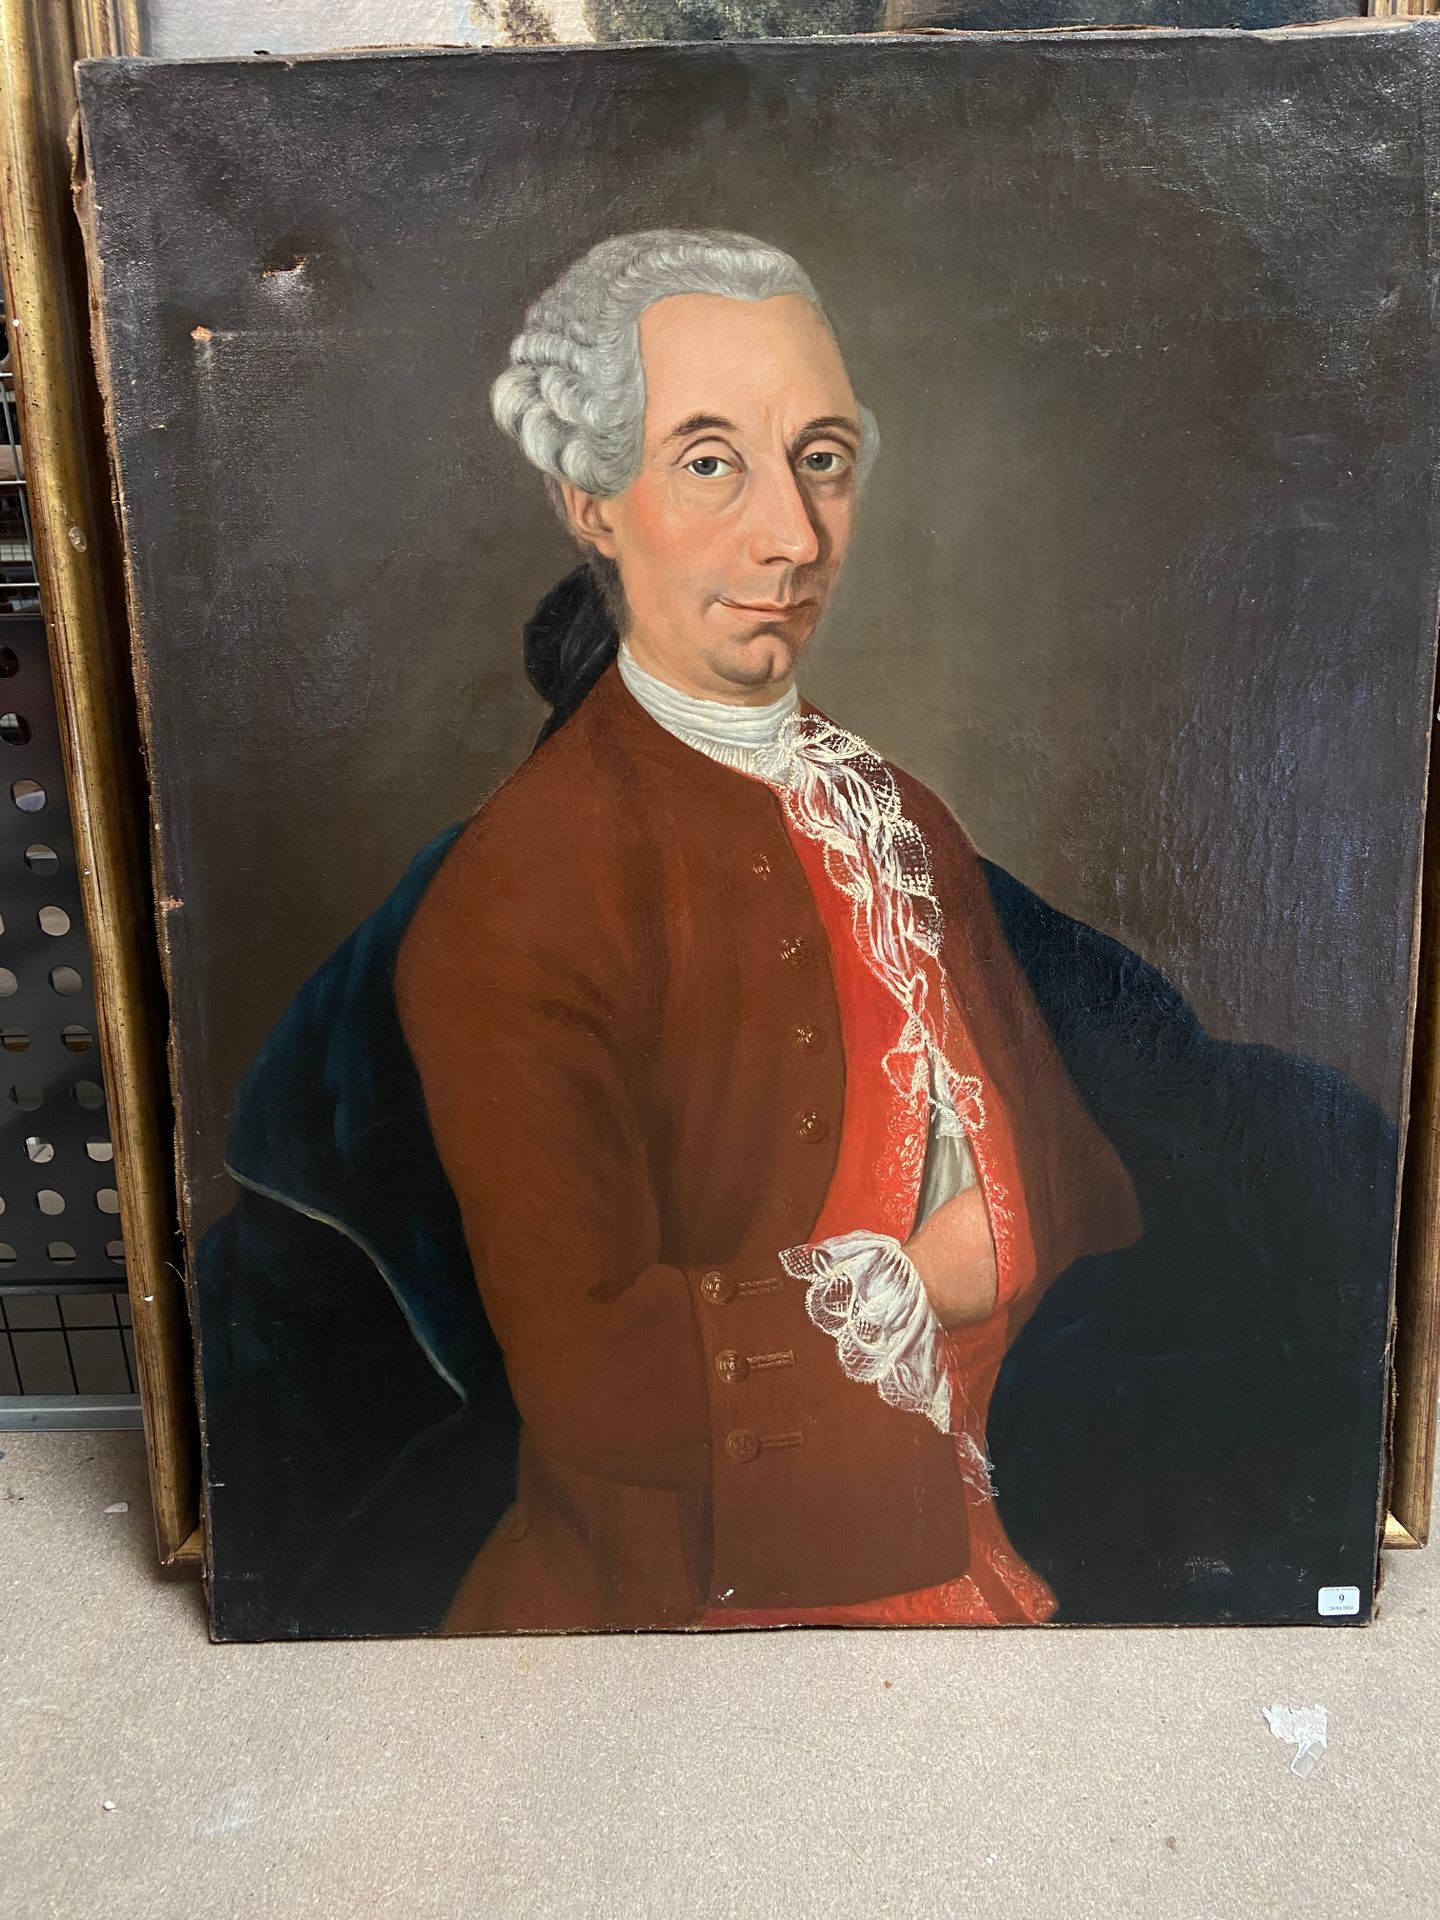 Null 18世纪的学校 

穿着红色连衣裙的绅士画像

布面油画

80 x 64 cm.意外事件